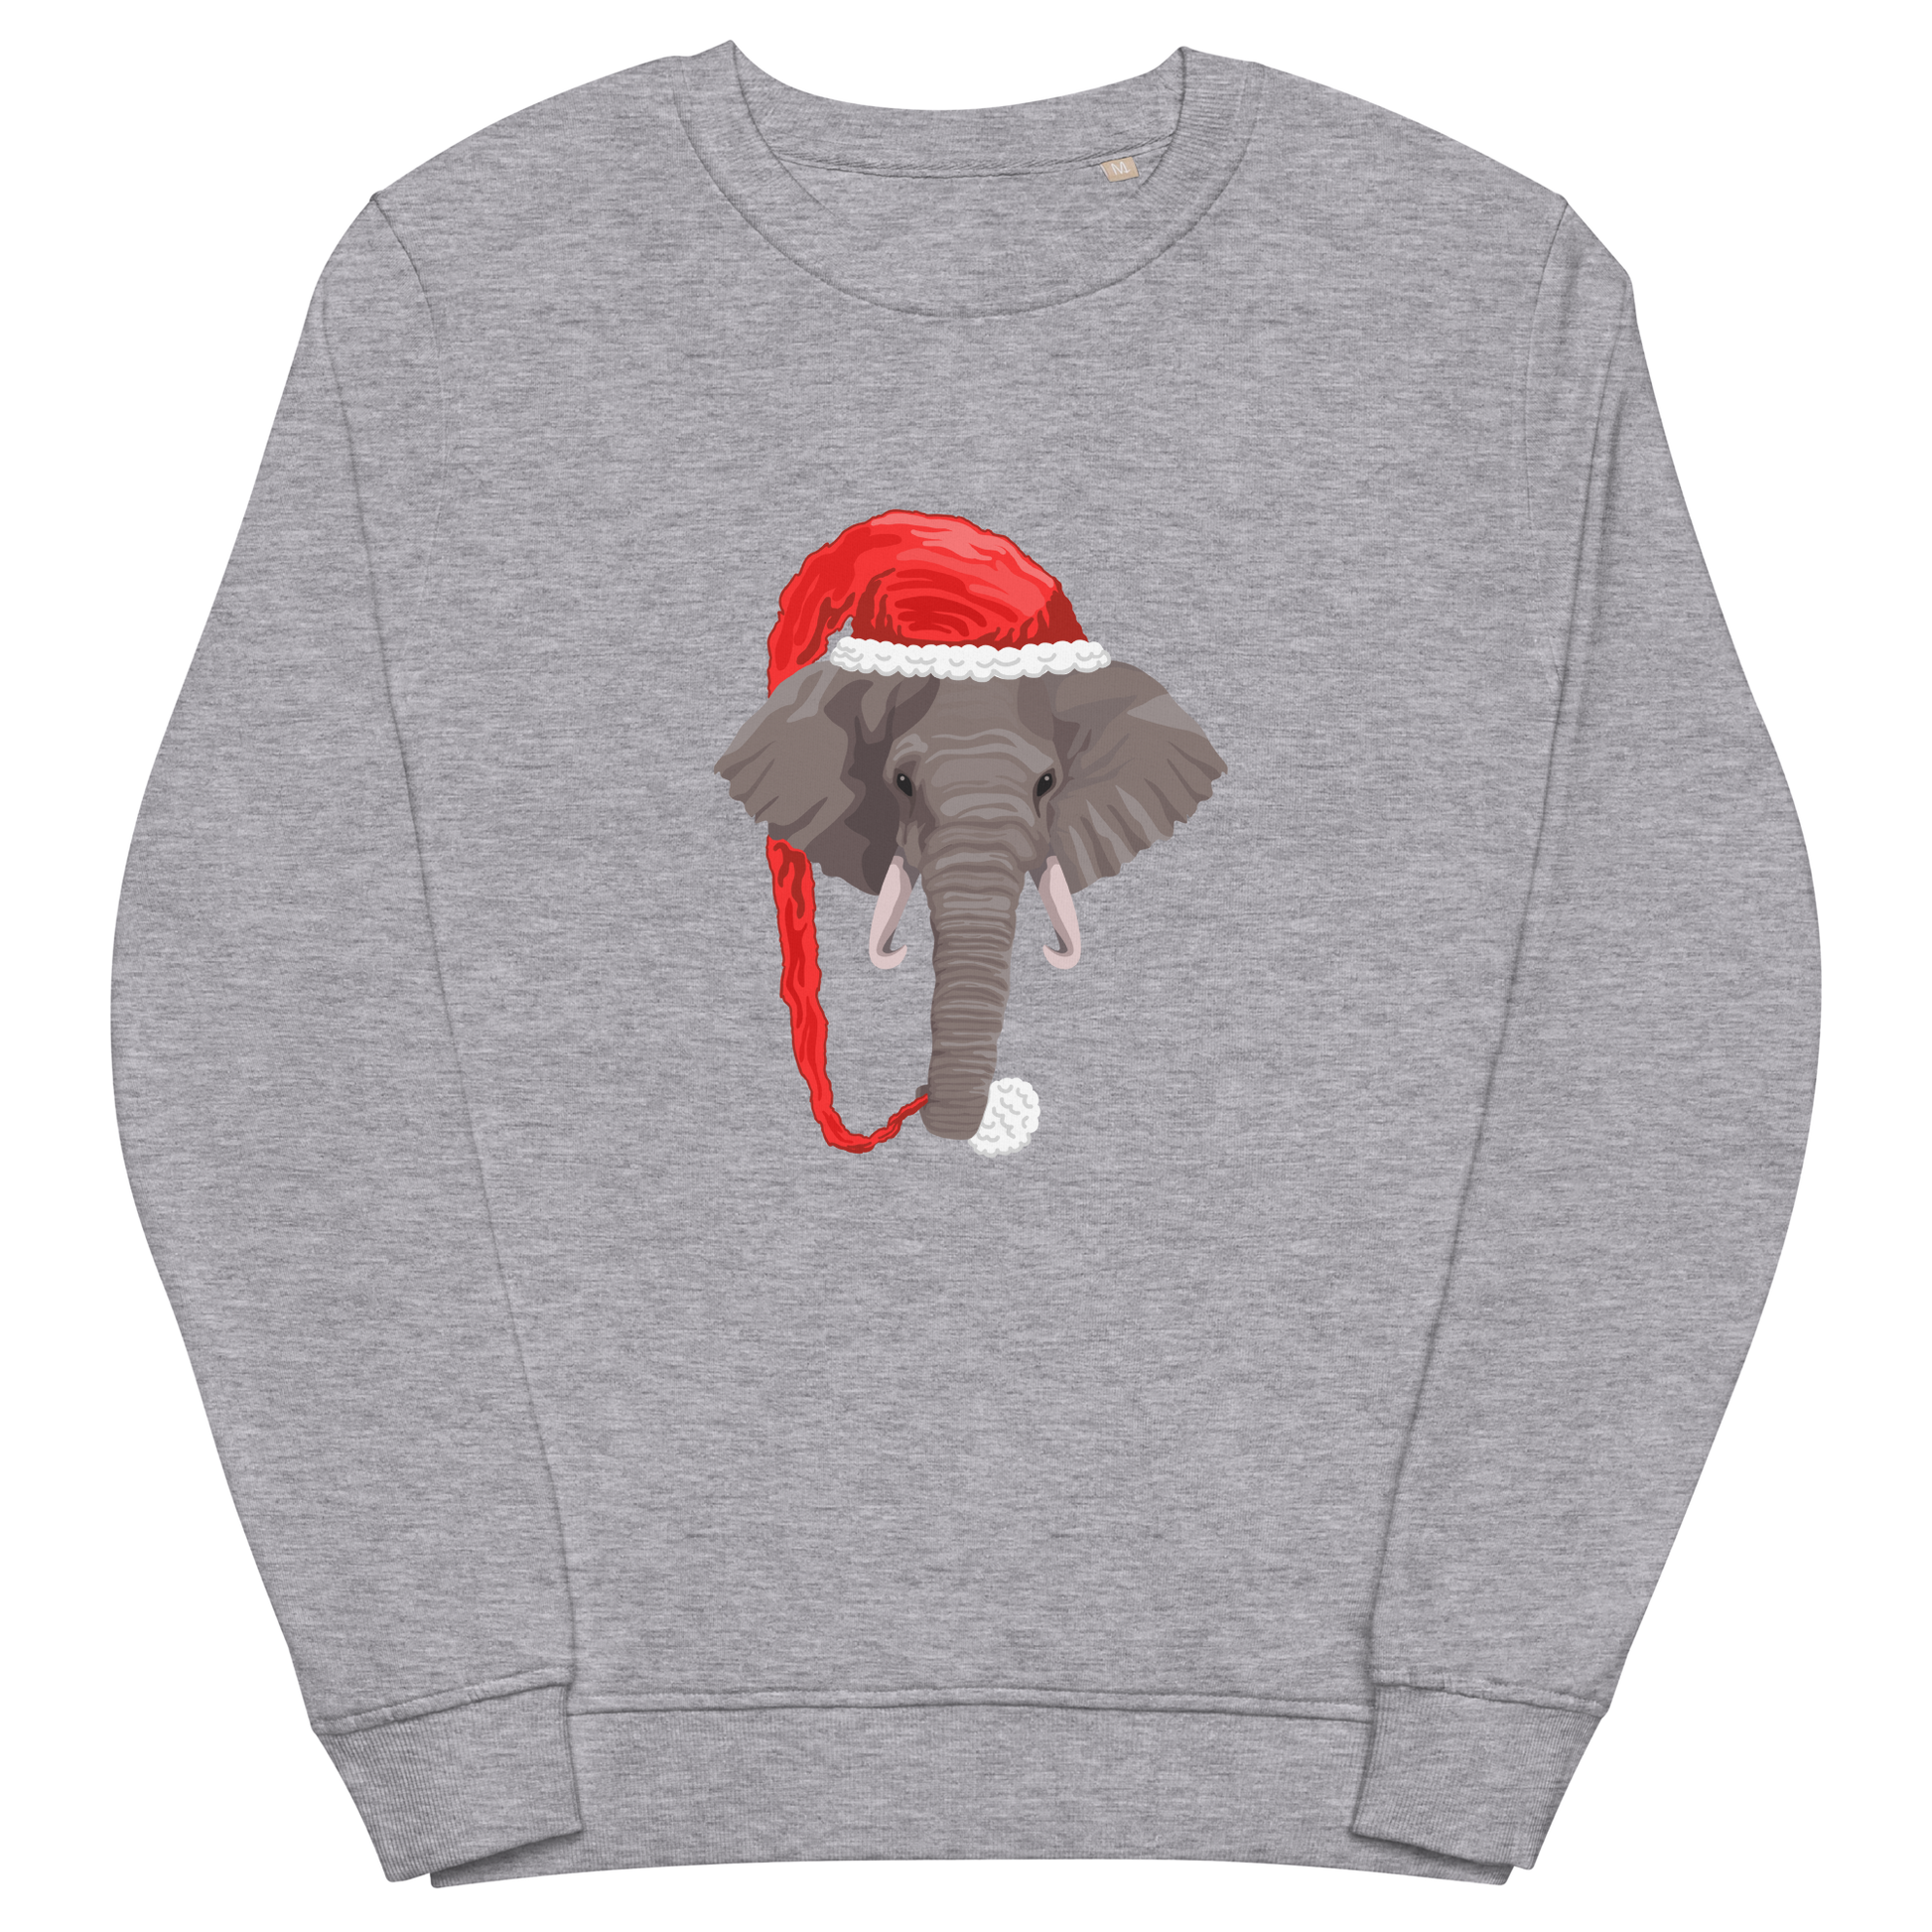 Grey Melange Organic Christmas Elephant Sweatshirt featuring a delight Elephant Wearing an Elf Hat graphic on the chest - Funny Christmas Graphic Elephant Sweatshirts - Boozy Fox